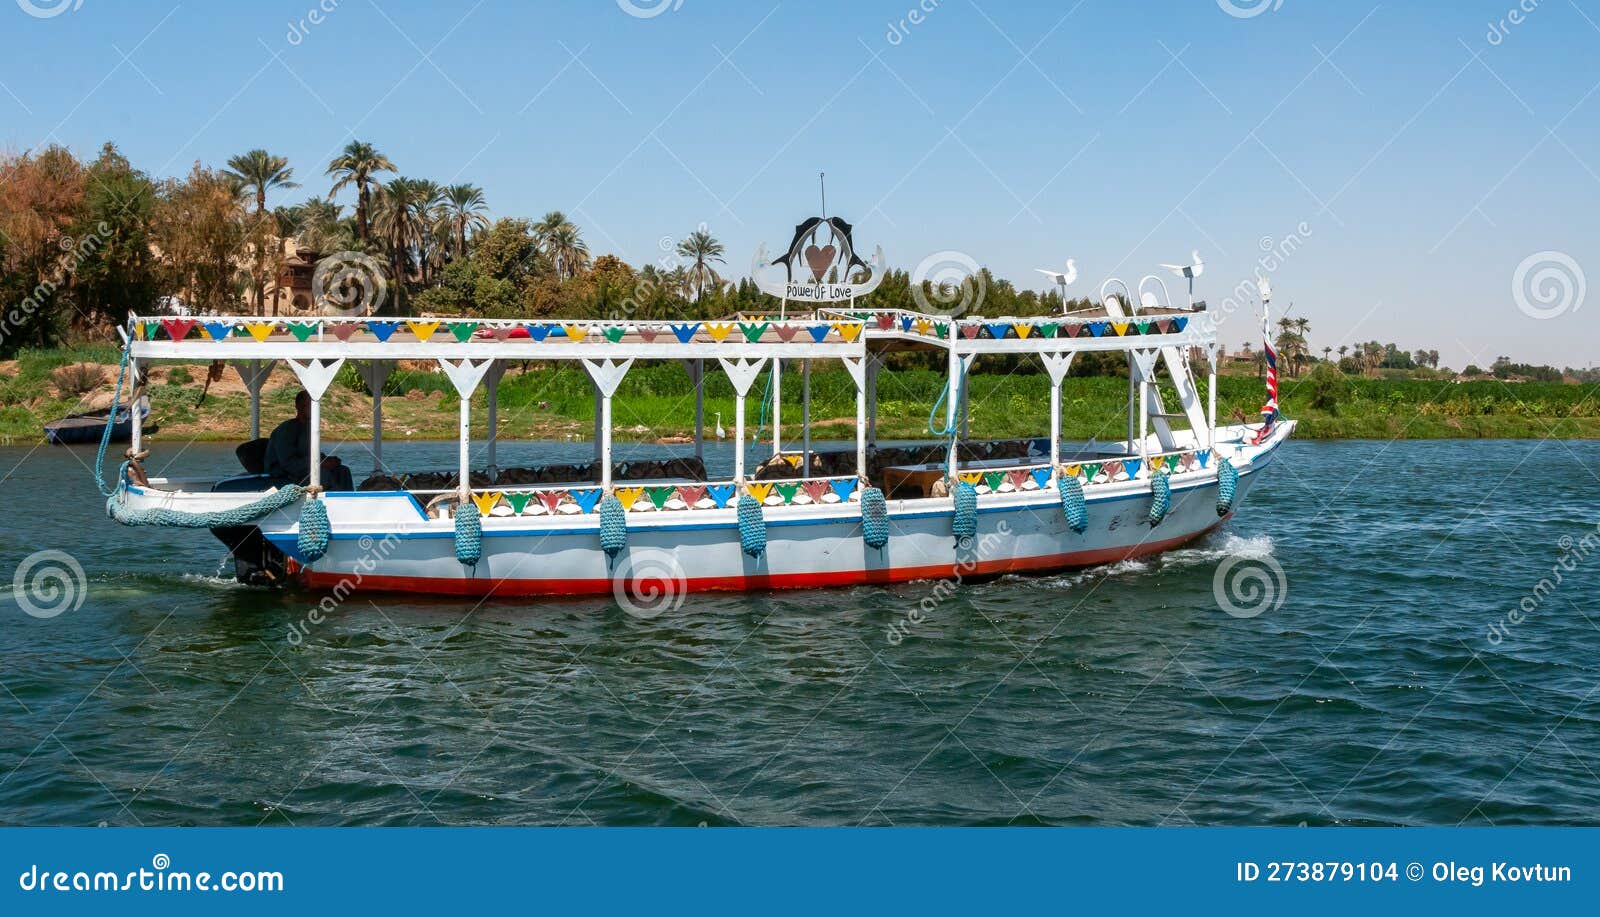 nile cruise boat karnak